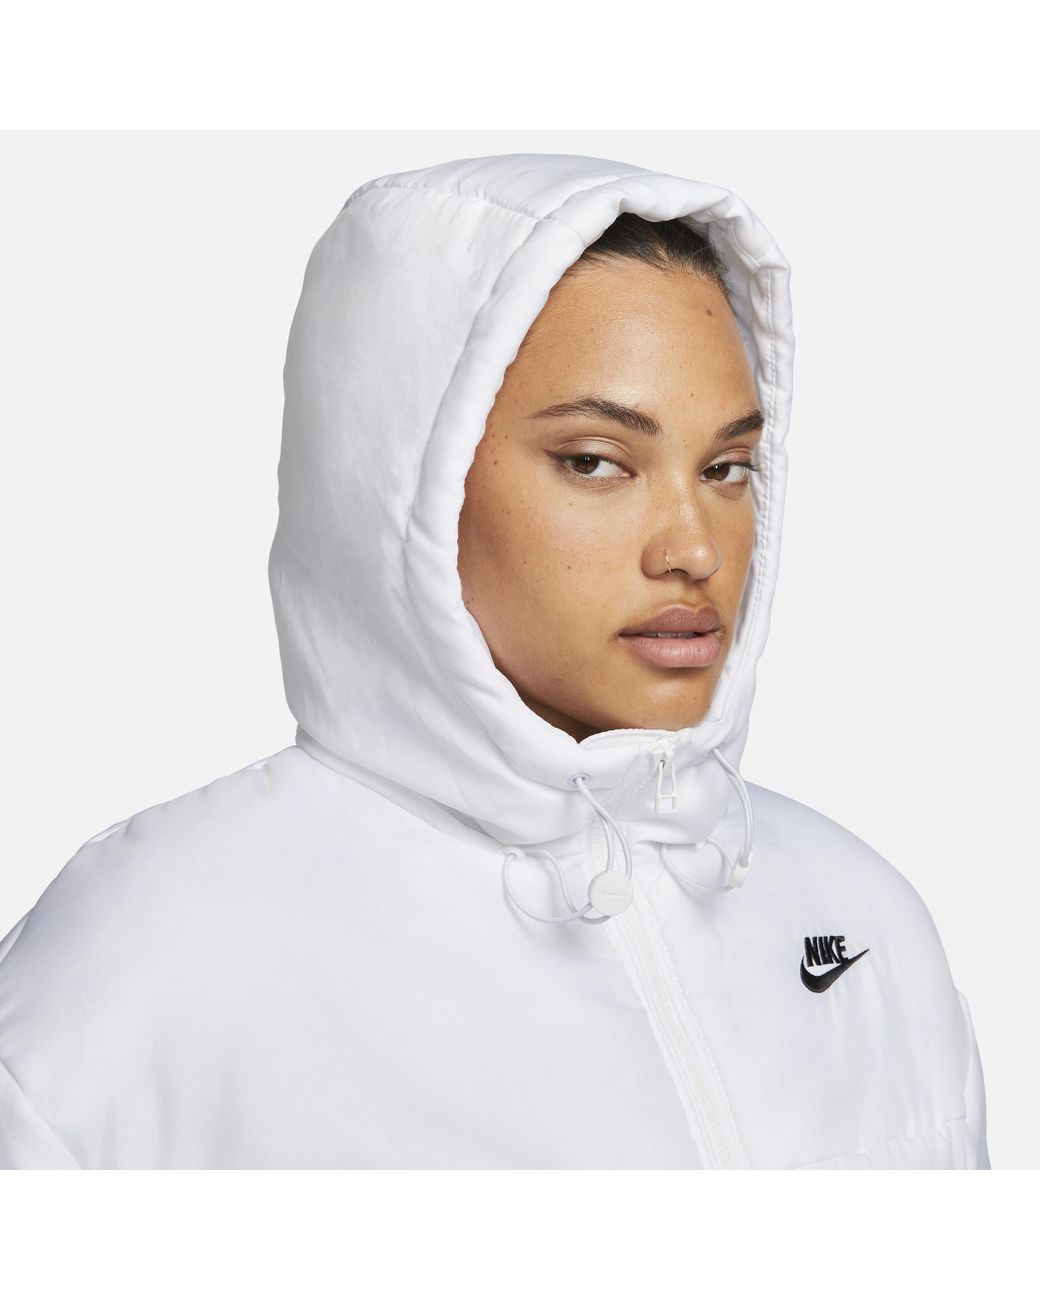 Nike Sportswear Classic Puffer Women's Therma-FIT Loose Hooded Jacket